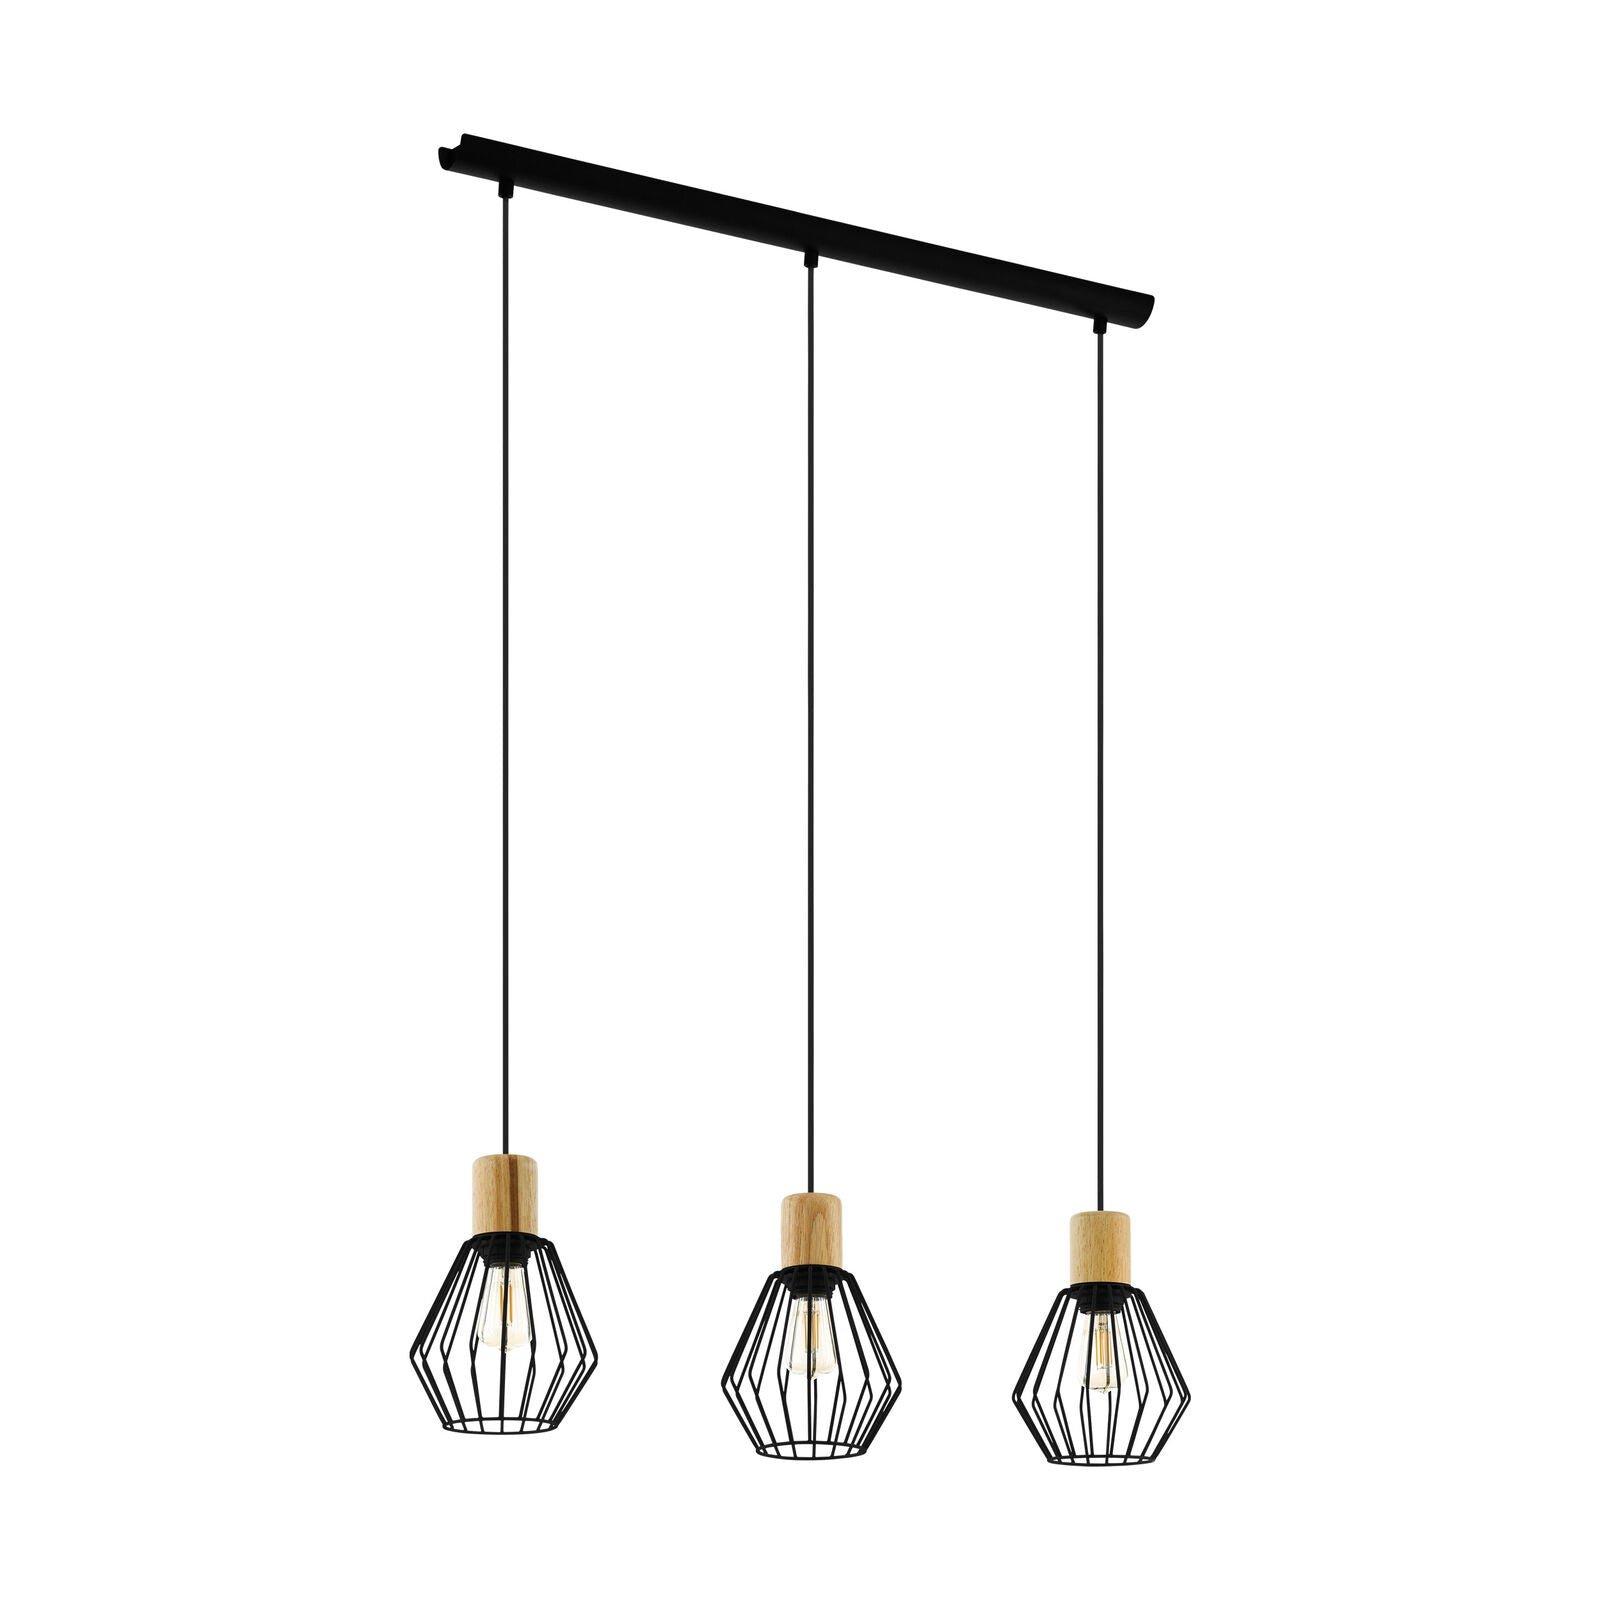 Hanging Ceiling Pendant Light Black Cage & Wood 3x E27 Bulb Kitchen Feature